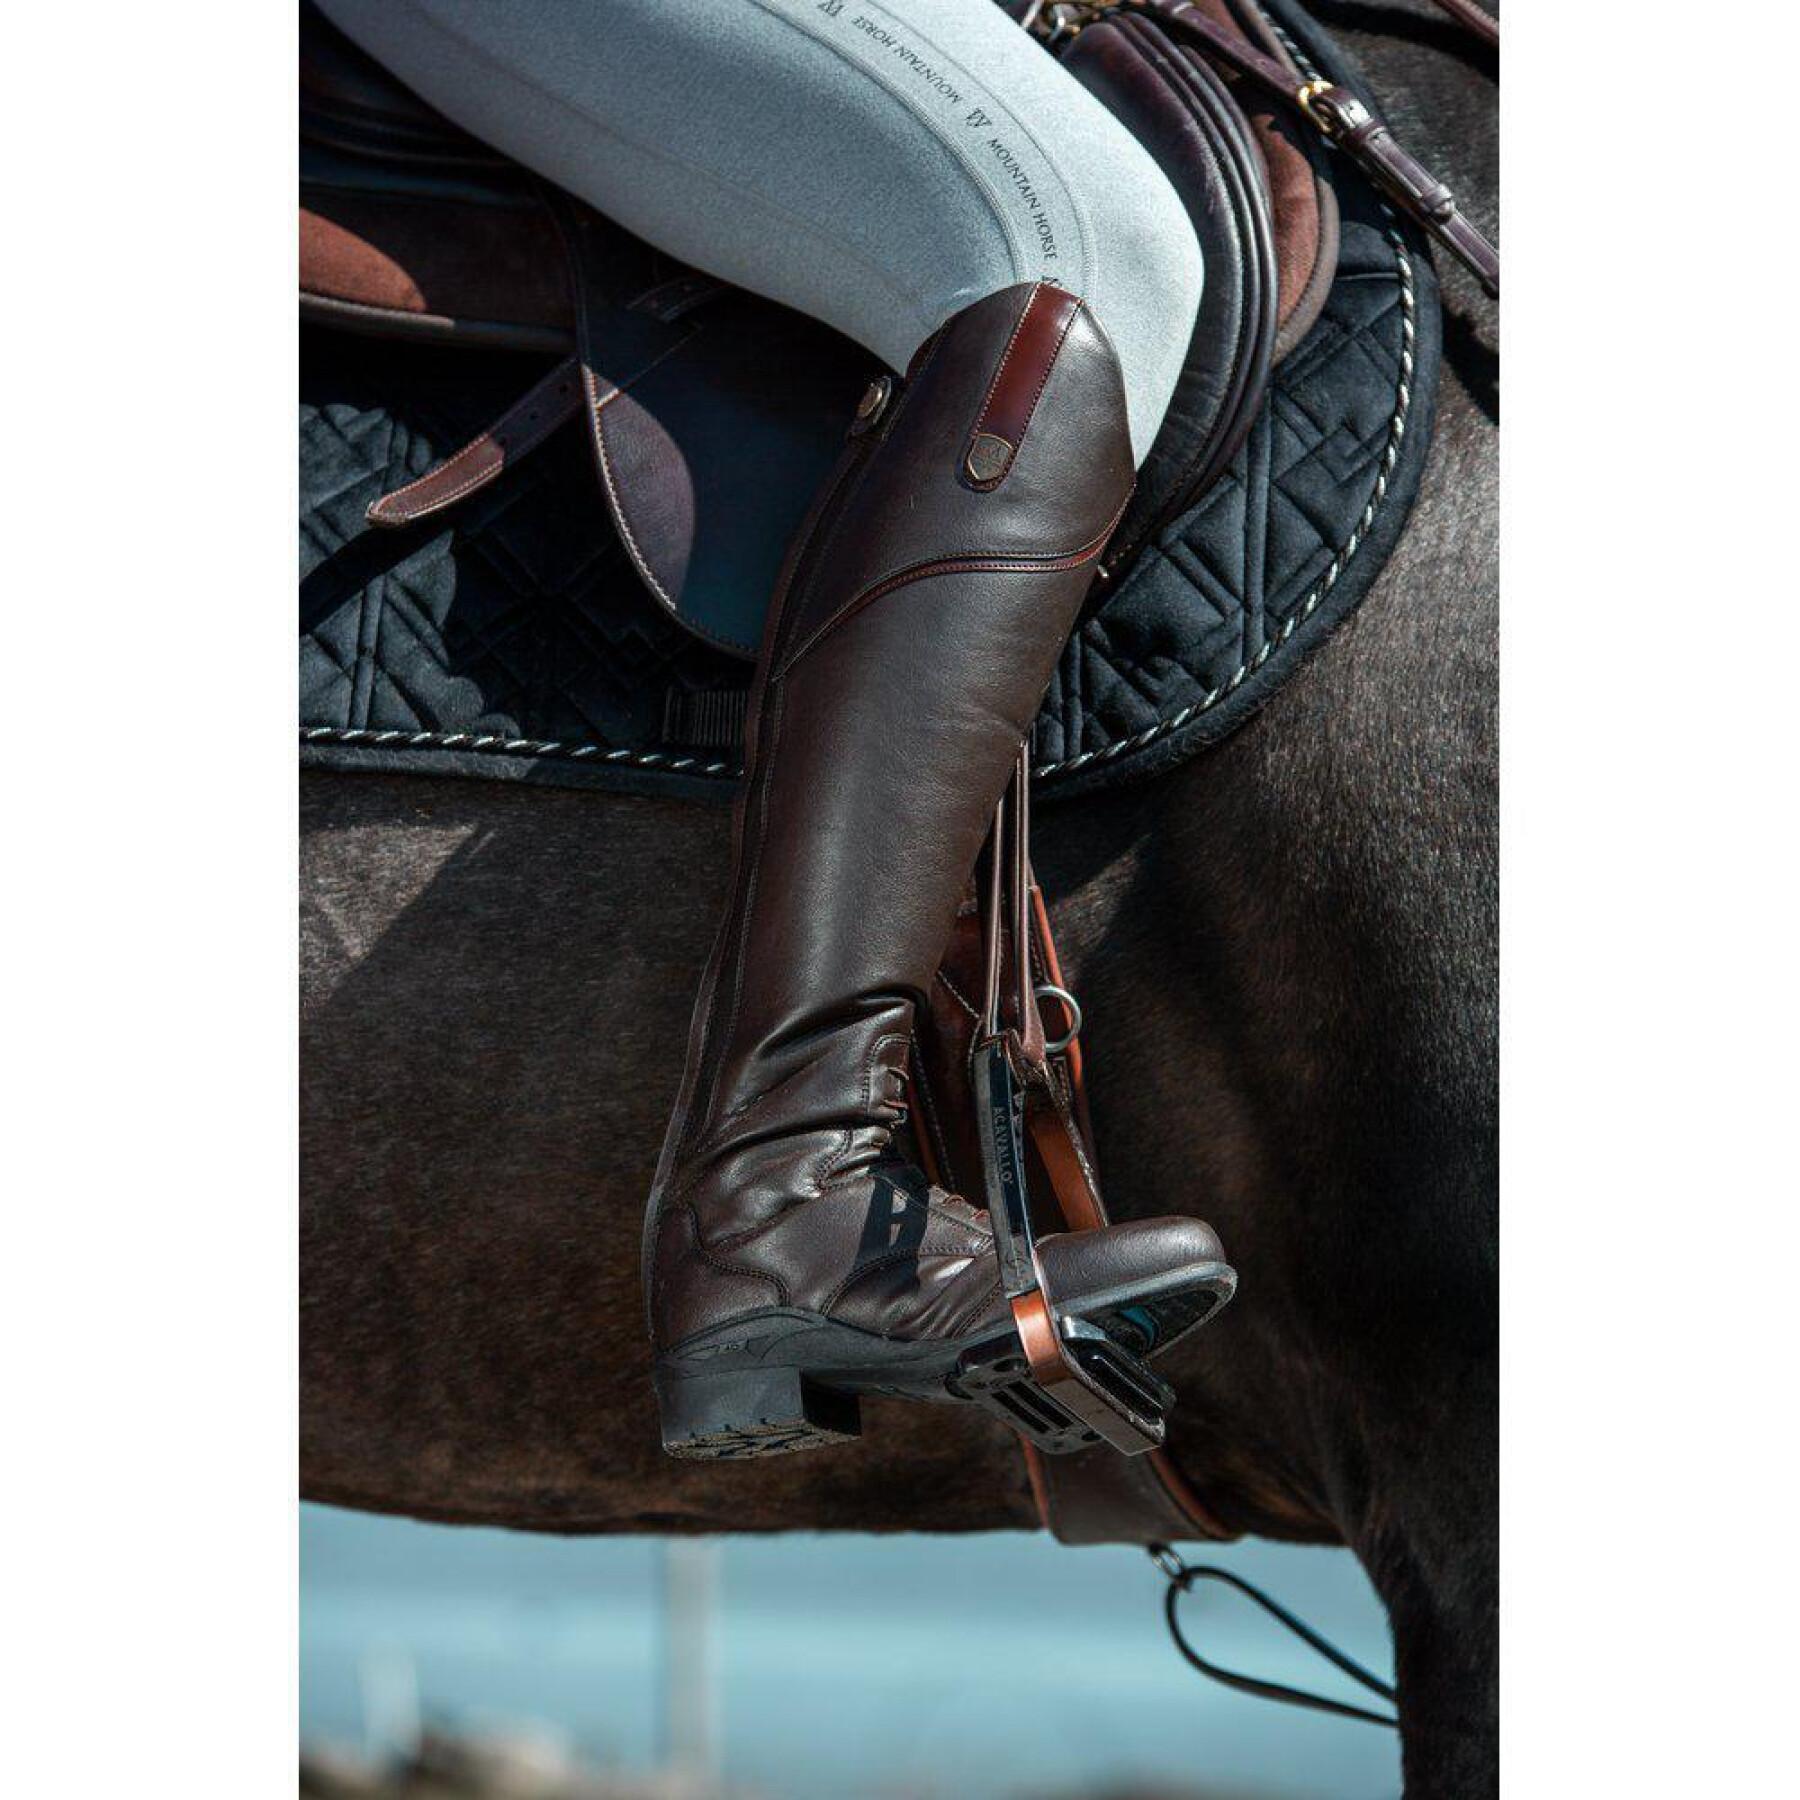 Women's riding boots Mountain Horse Veganza Regular-Narrow